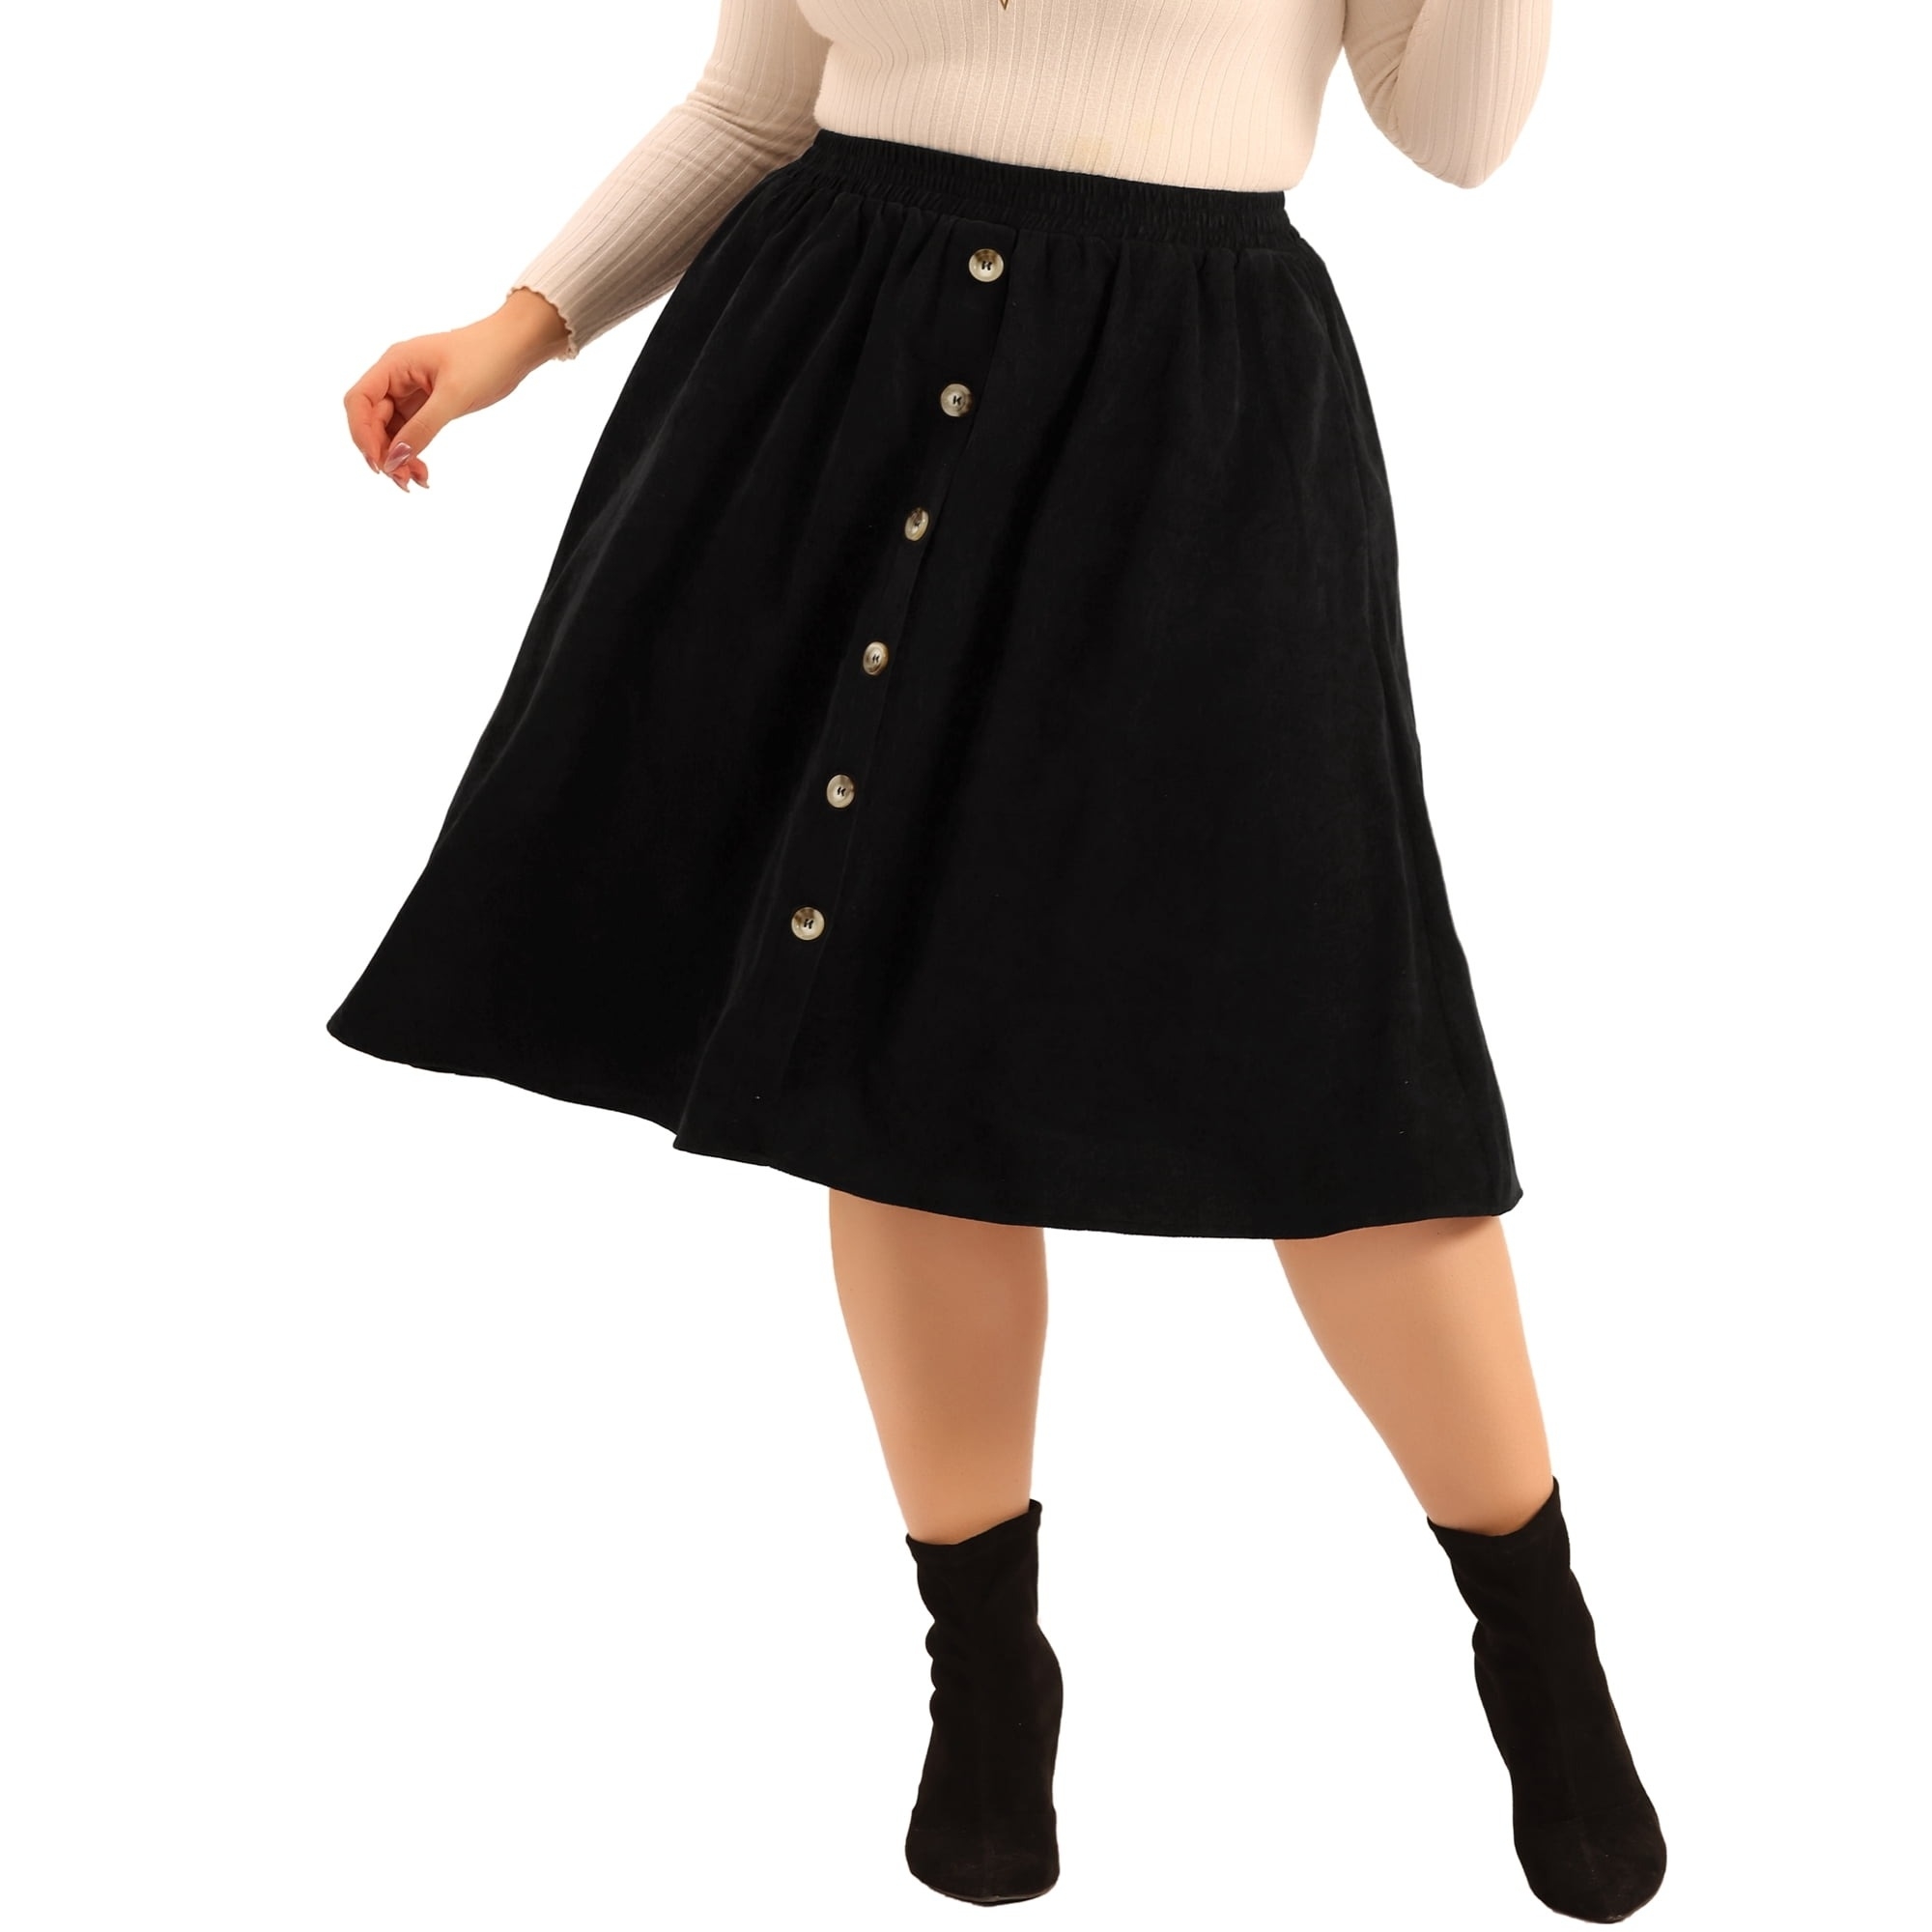 model wearing the black corduroy skirt